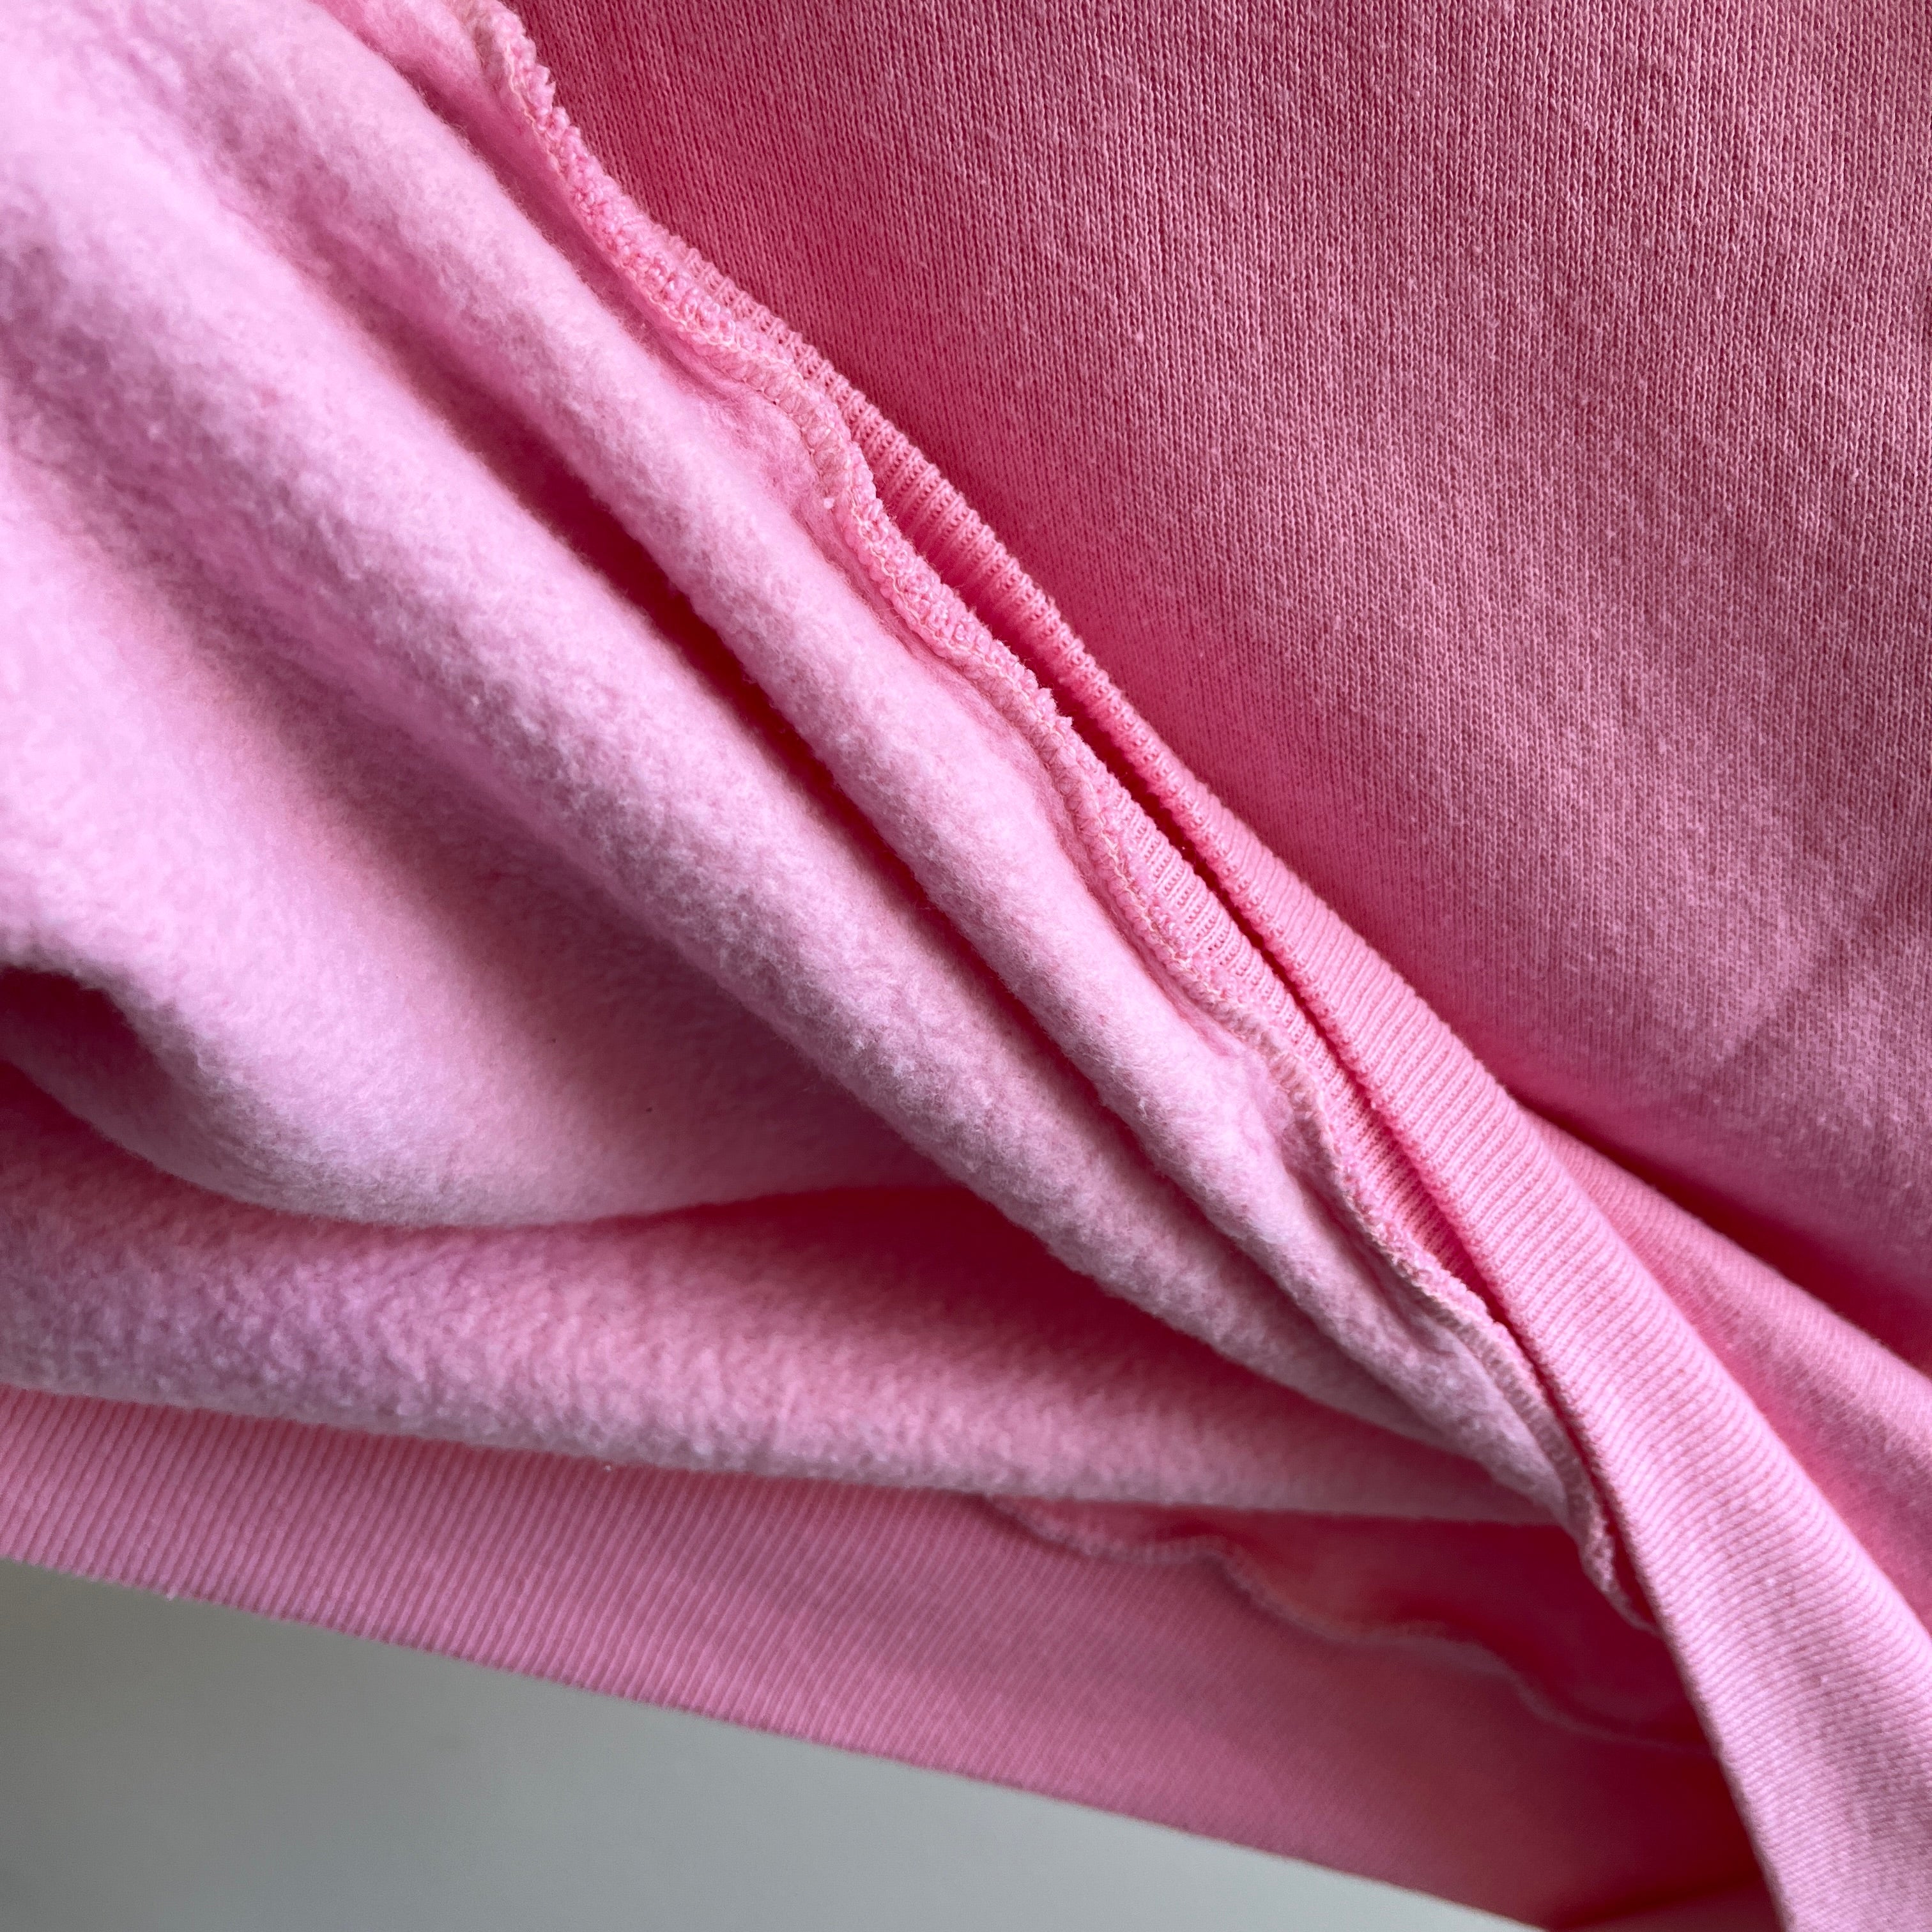 1980s Blank Barely (Never?) Worn Bubblegum Pink Raglan Sweatshirt by Jerzees